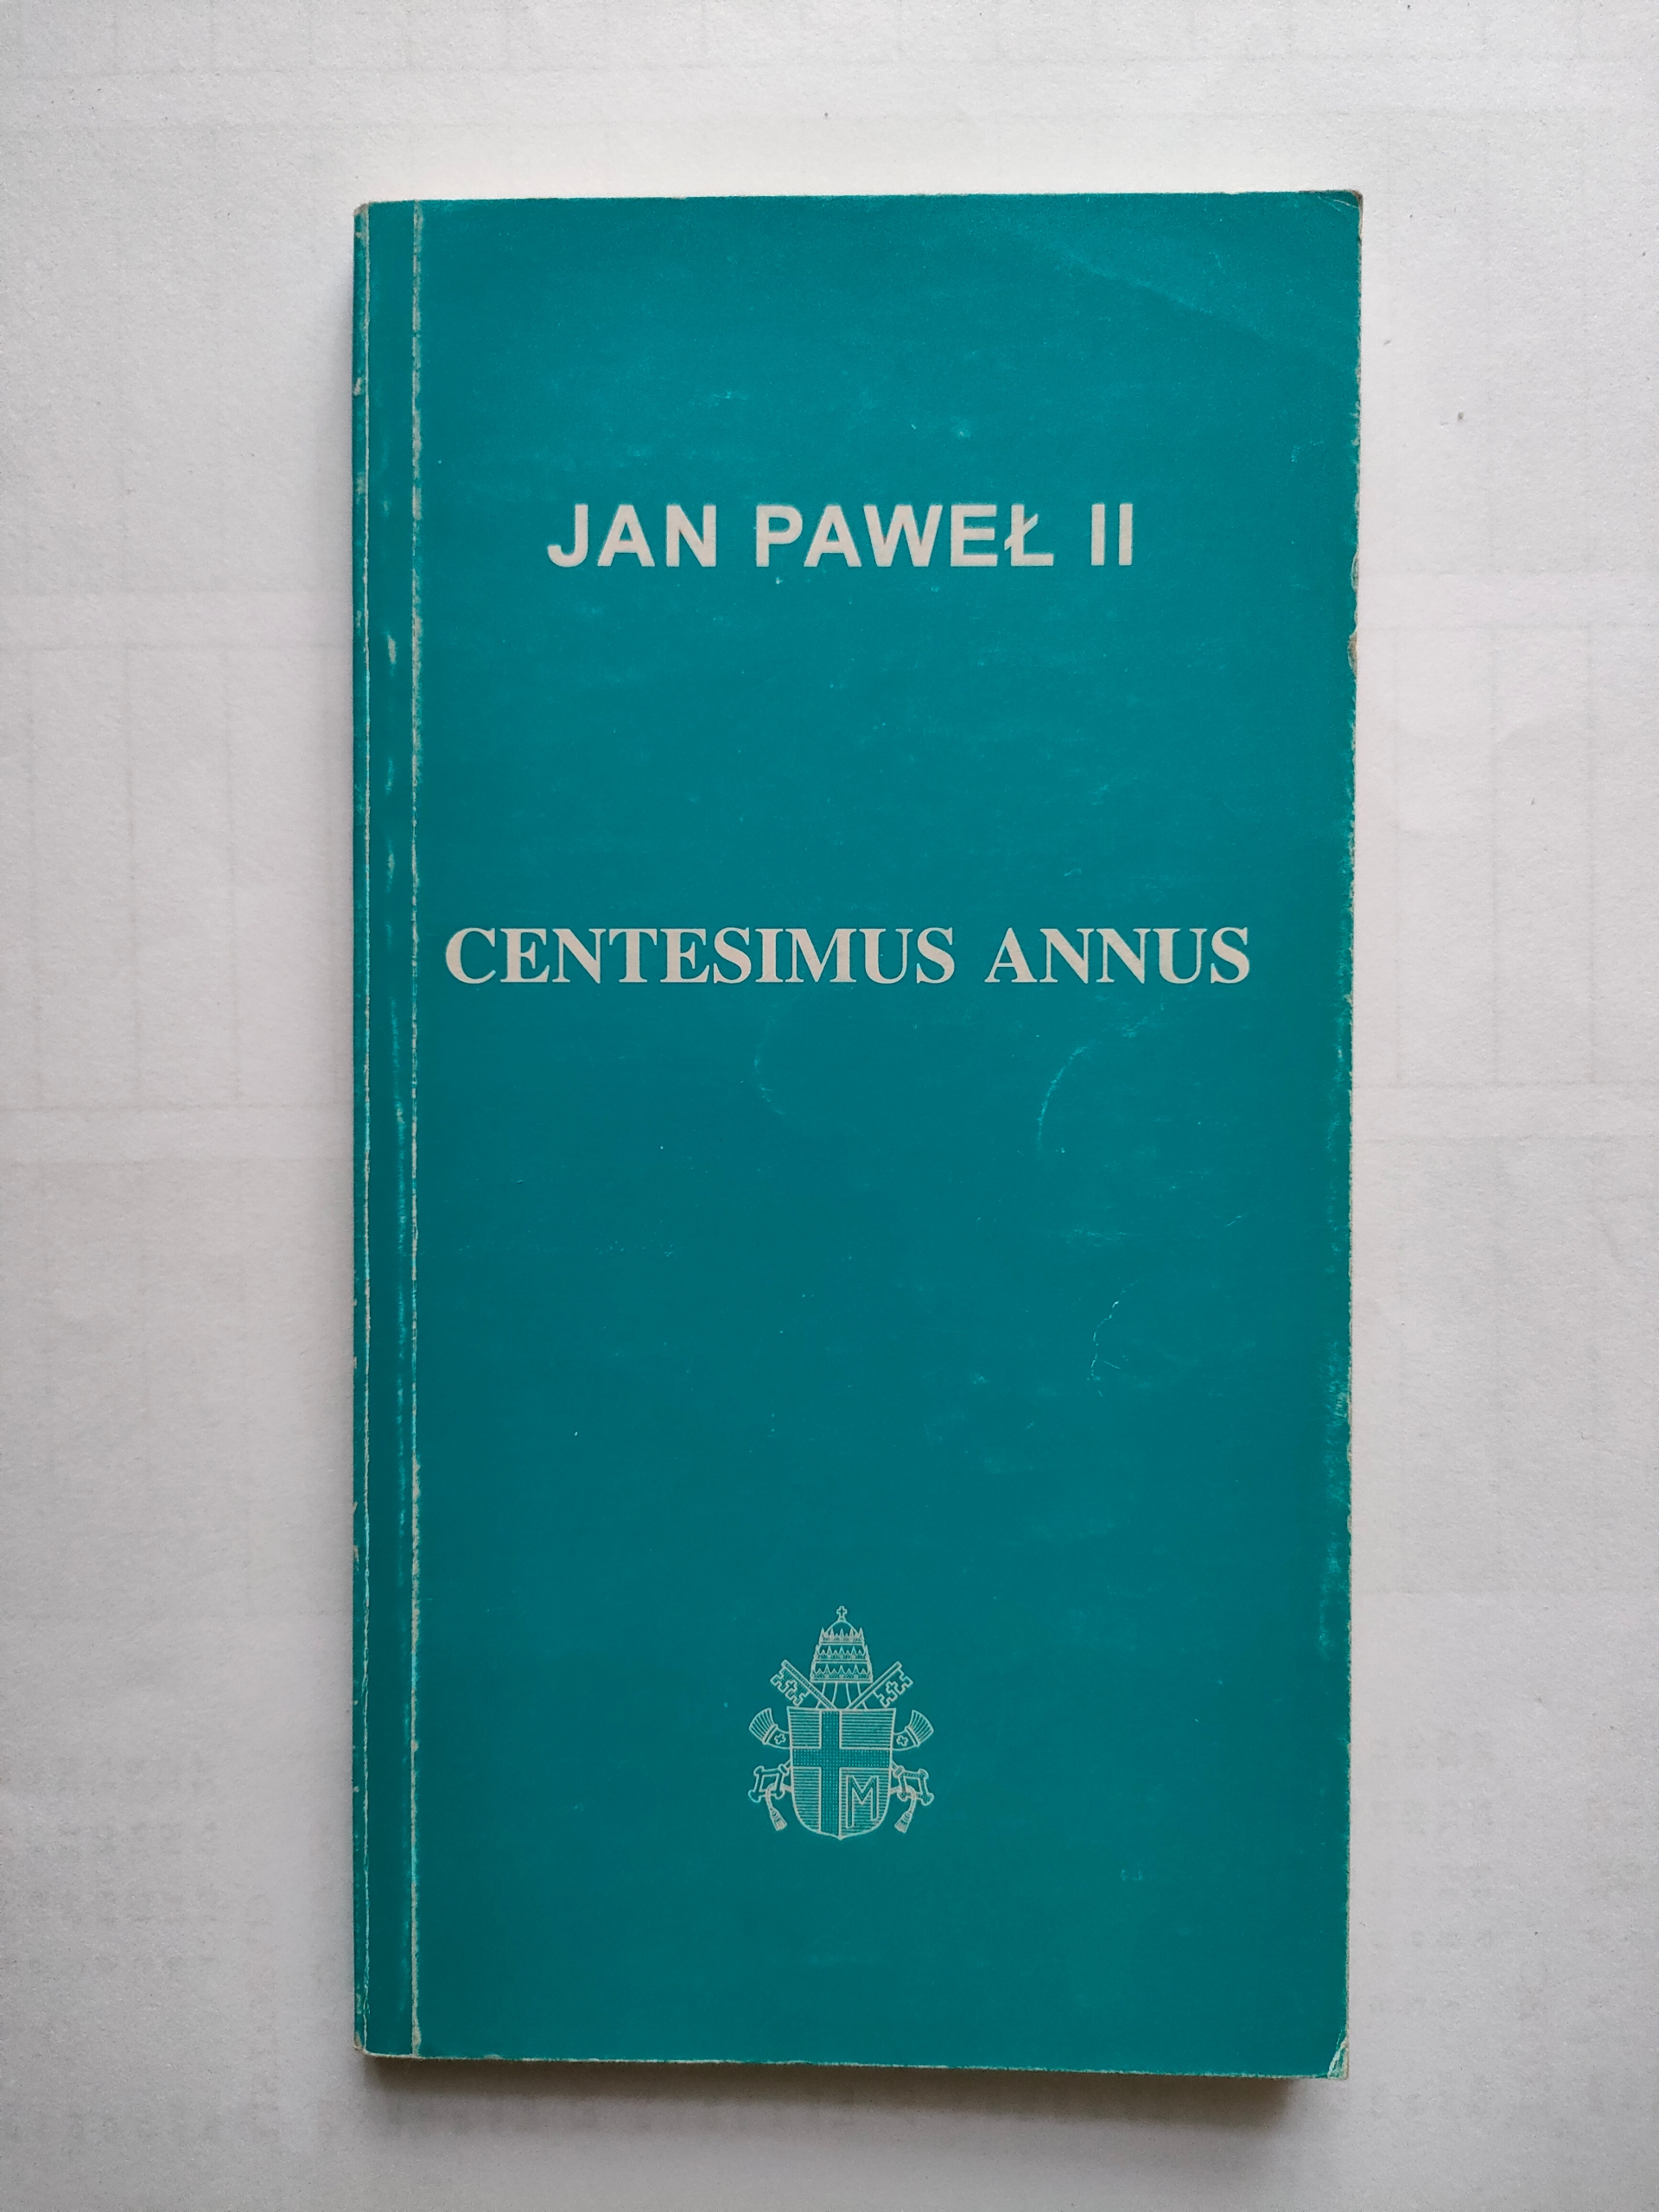 Jan Paweł II encyklika Centesimus annus tanio BCM 13548979140 Allegro.pl